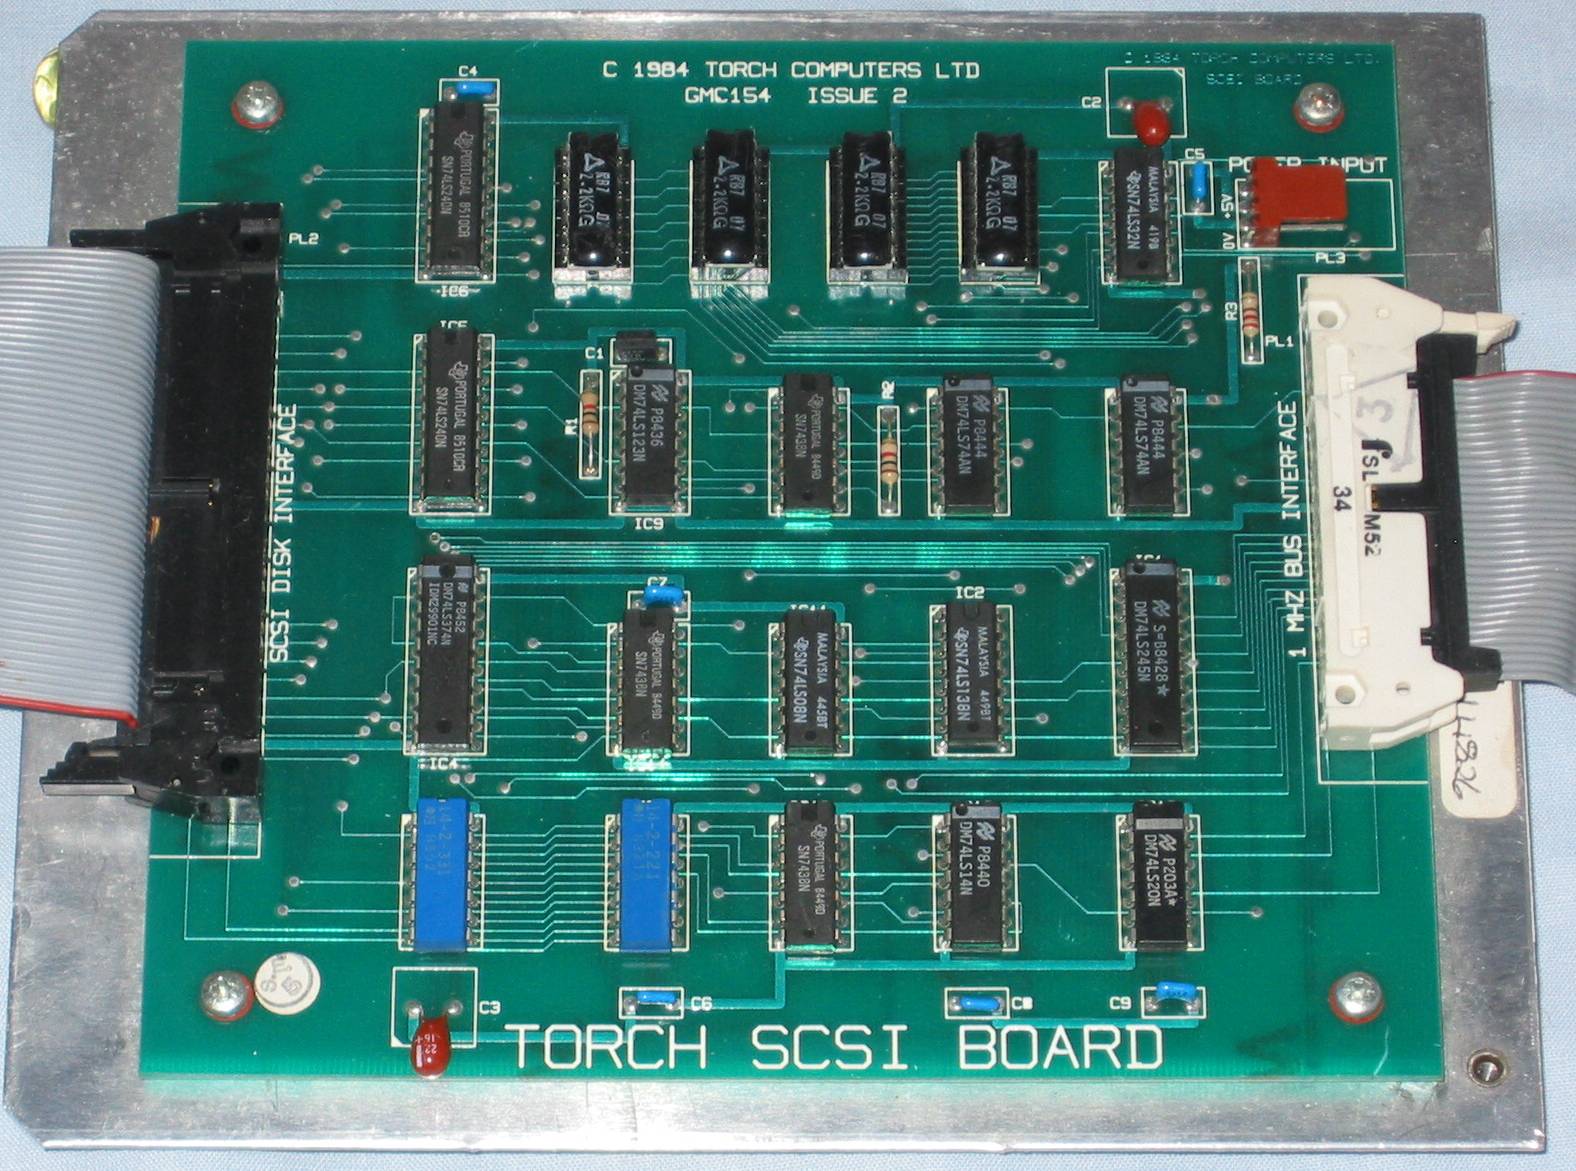 Torch SCSI board HiRes